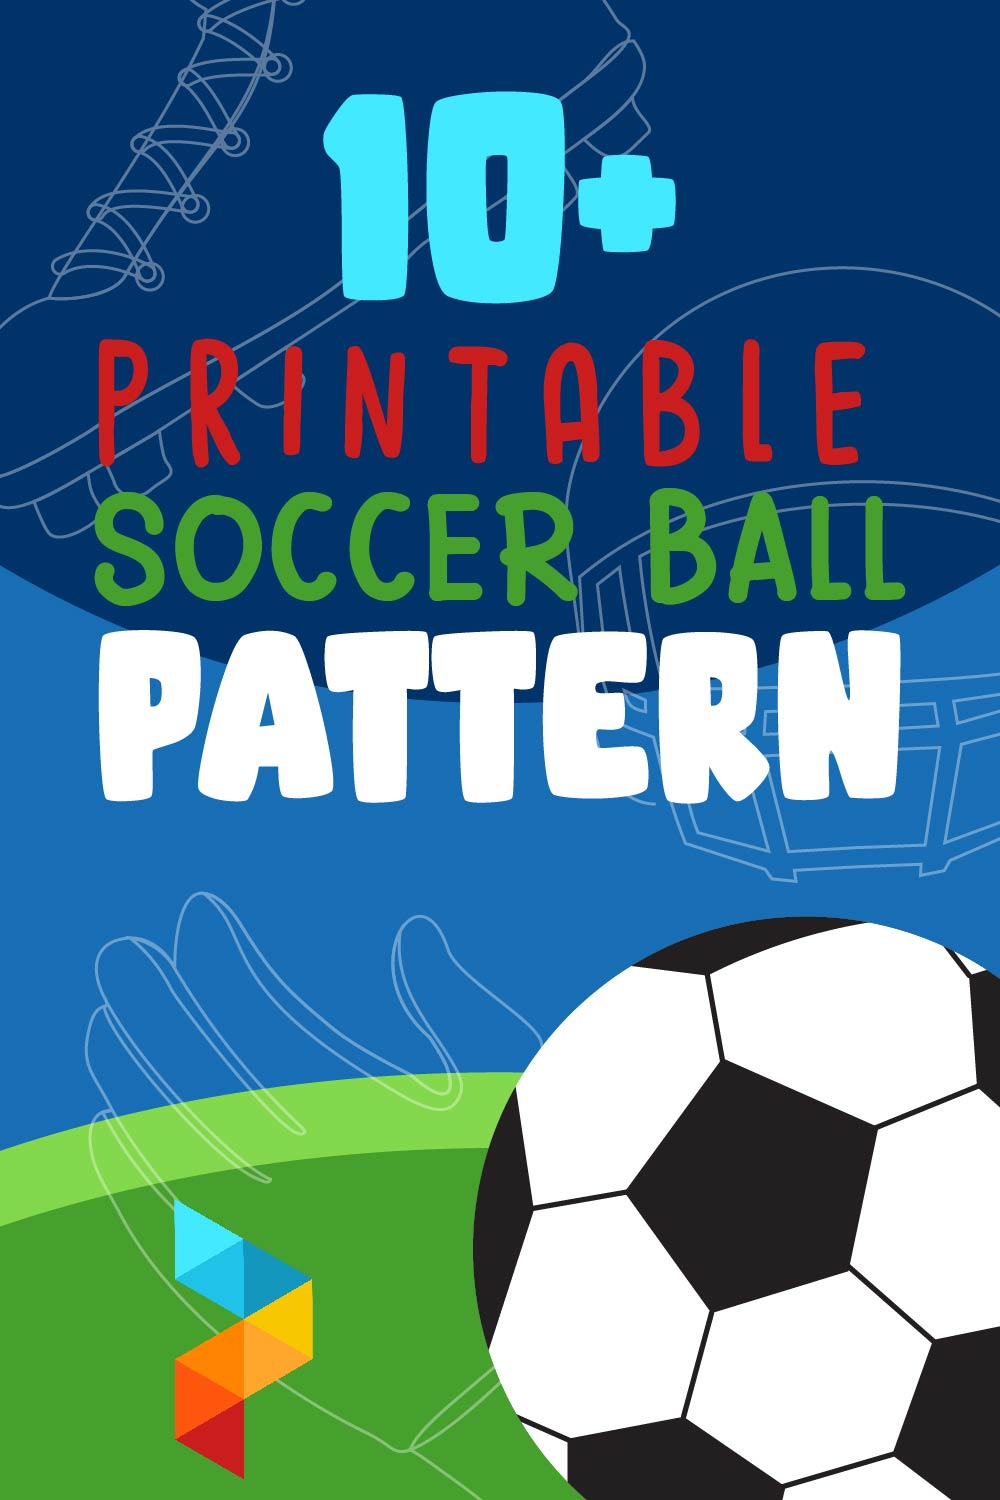 Printable Soccer Ball Pattern